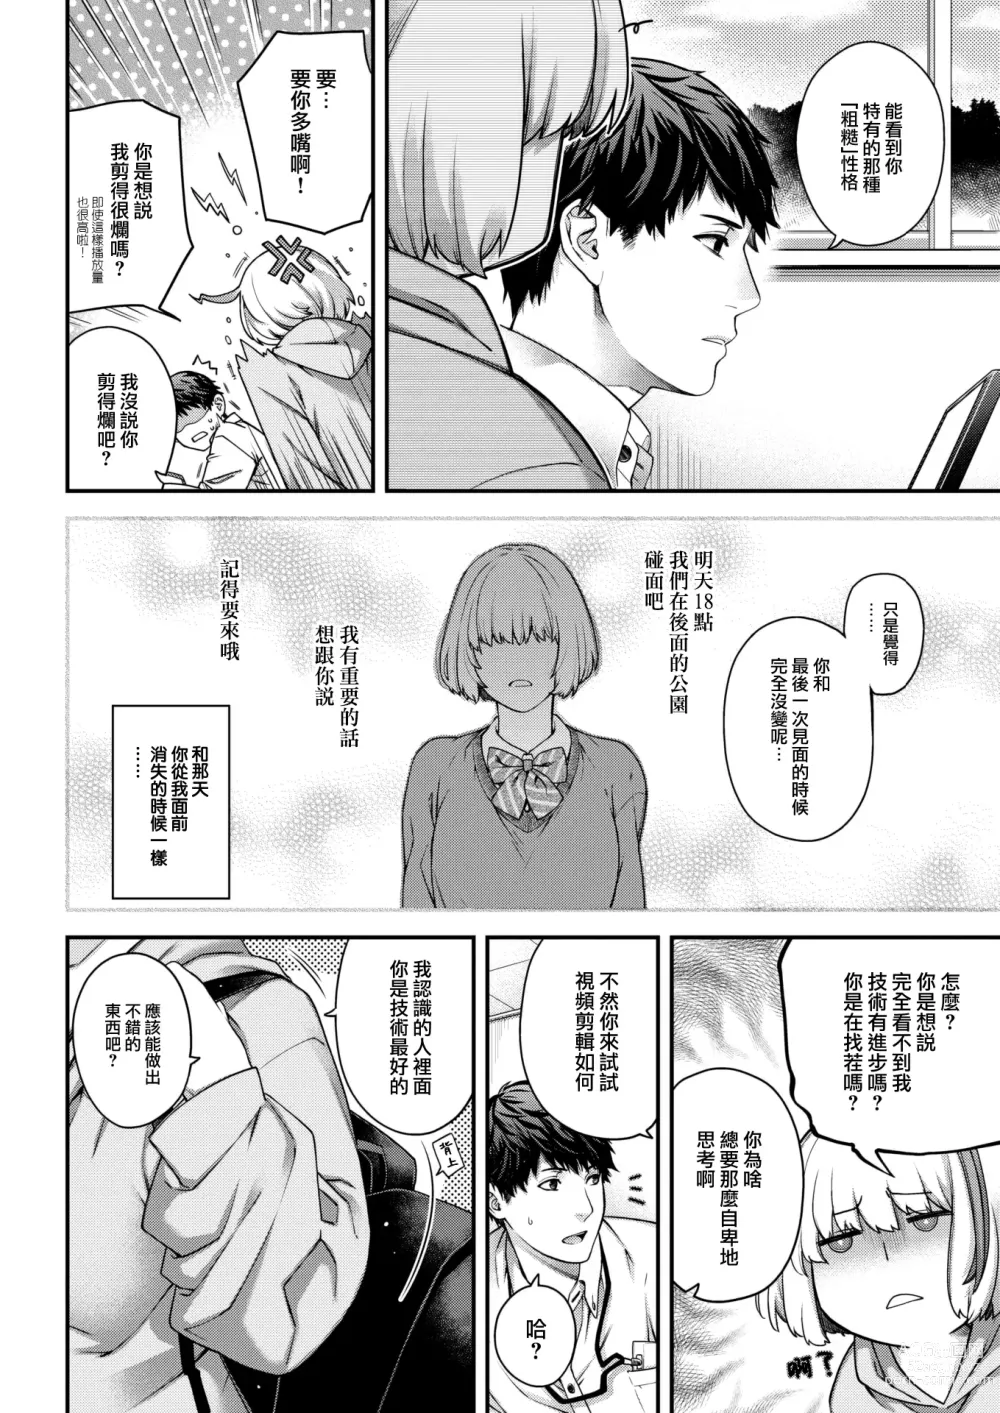 Page 5 of manga Sugao no Kikyou